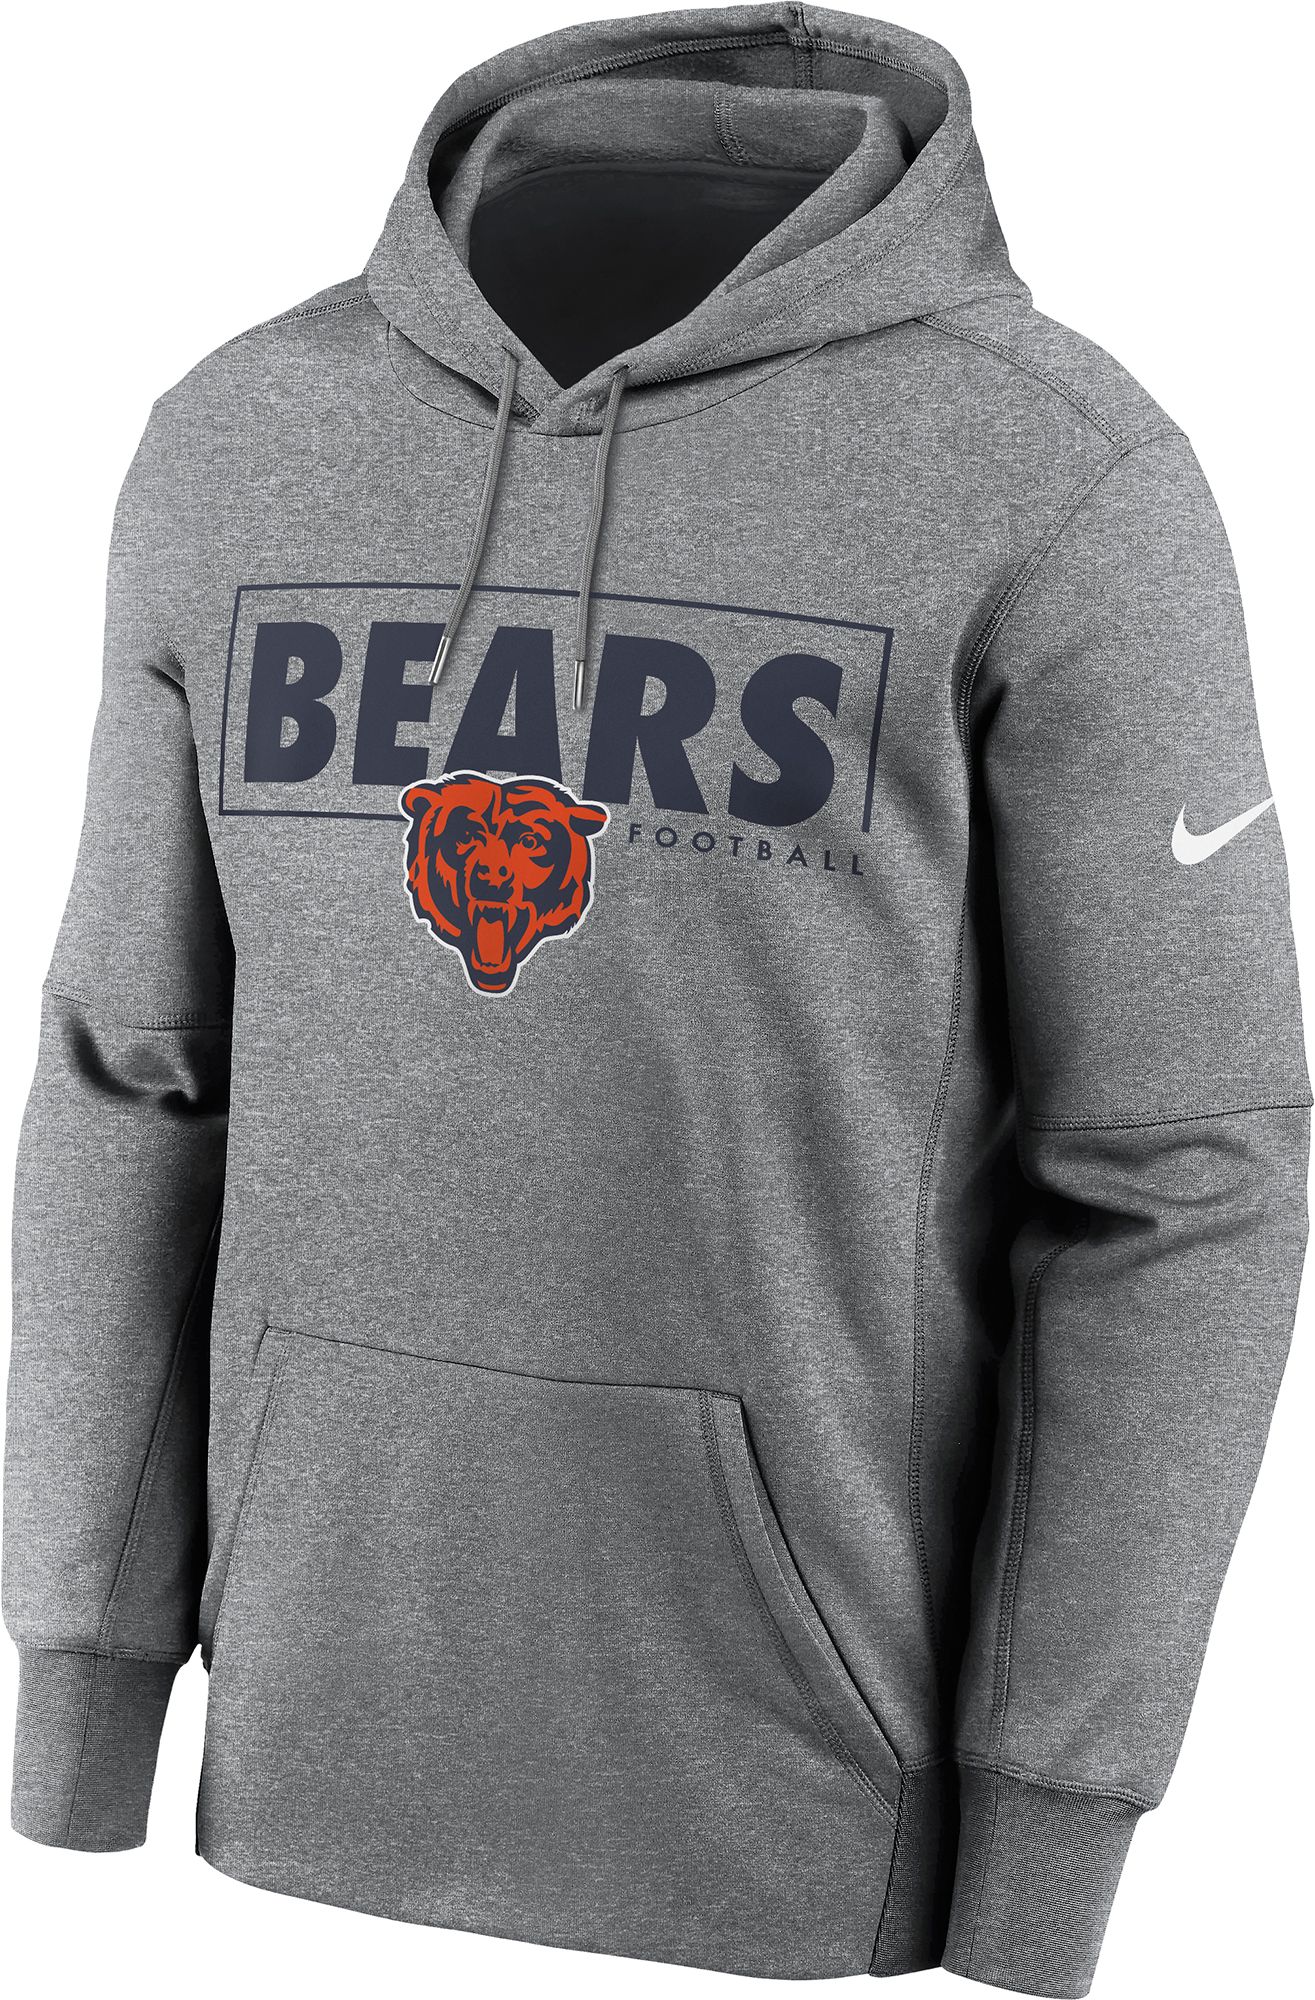 Men's Nike Orange Chicago Bears Local Essential T-Shirt Size: Medium